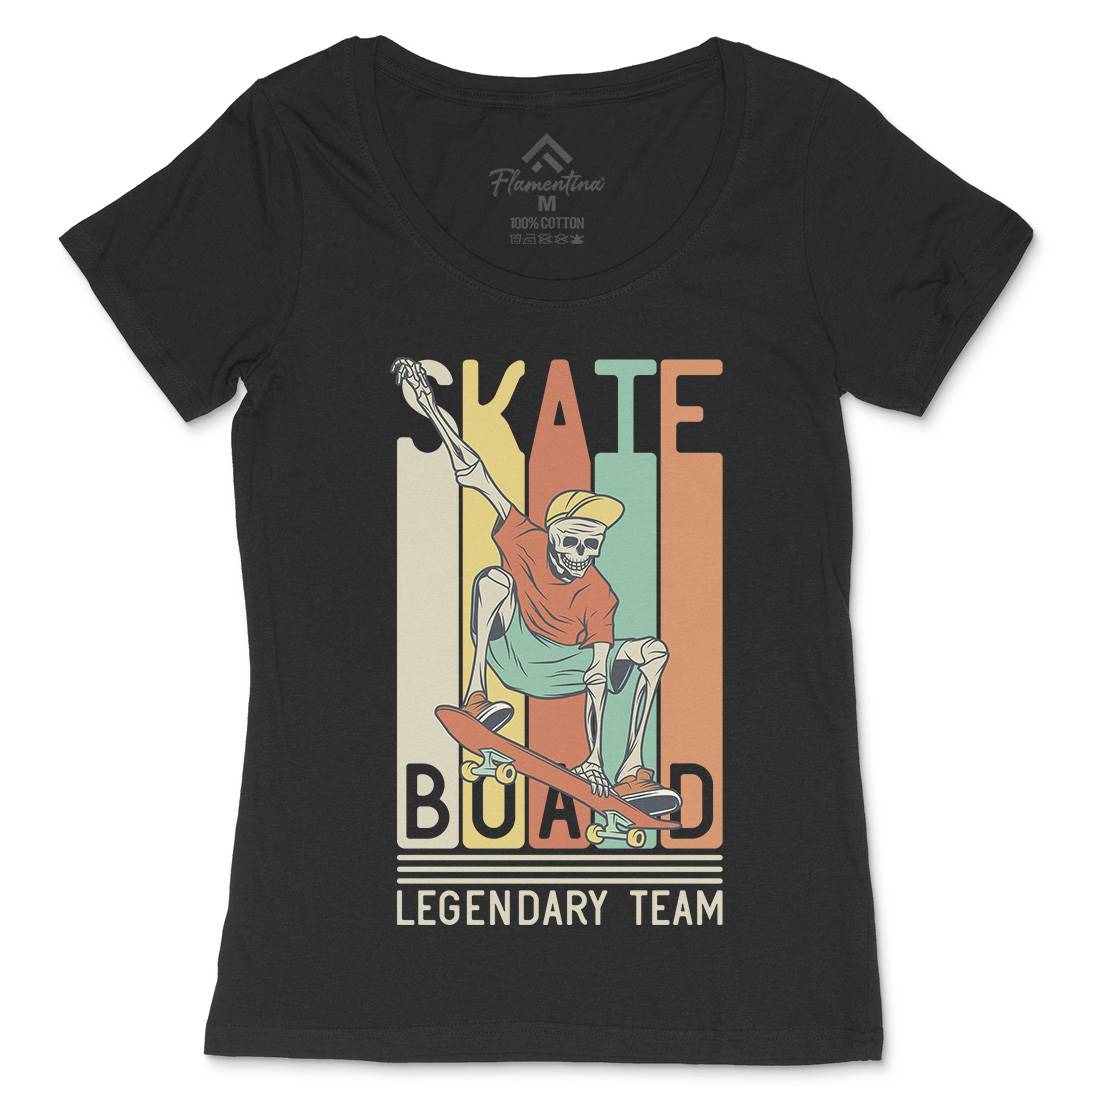 Legendary Team Womens Scoop Neck T-Shirt Skate D952